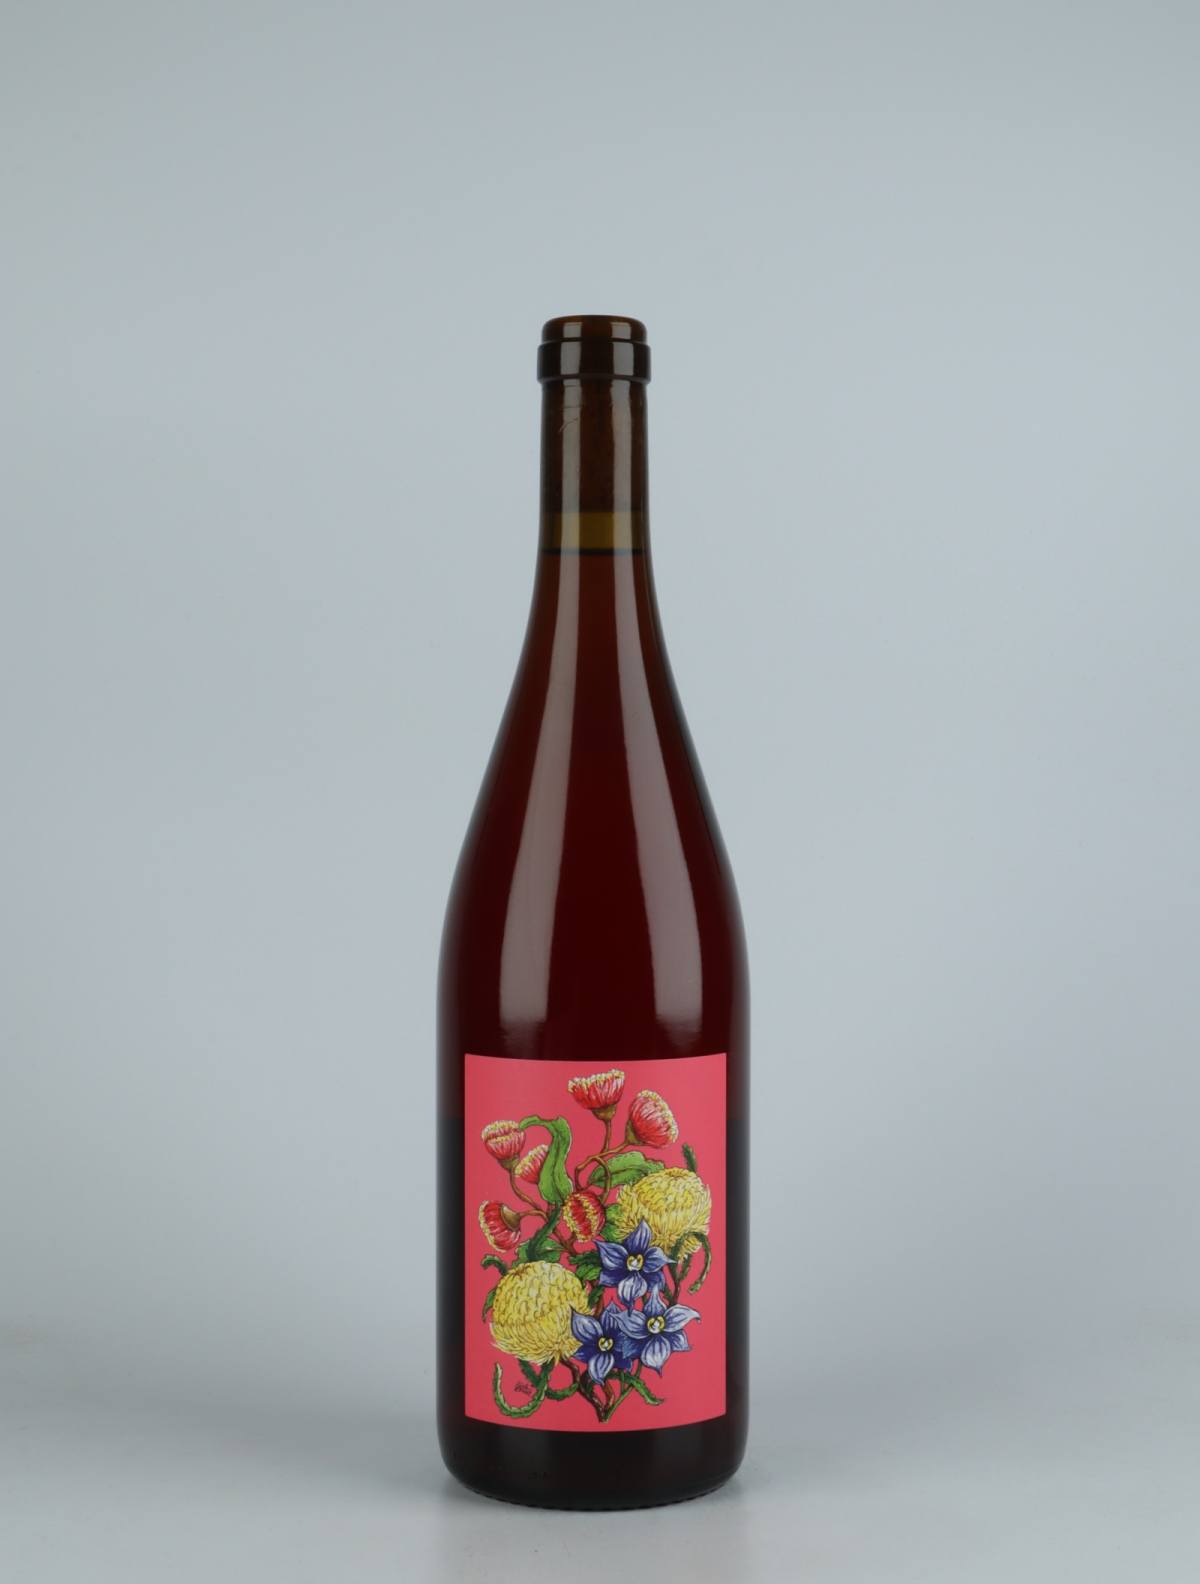 A bottle 2021 Pinot Noir, Pinot Gris, Chardonnay Rosé from Borachio, Adelaide Hills in Australia